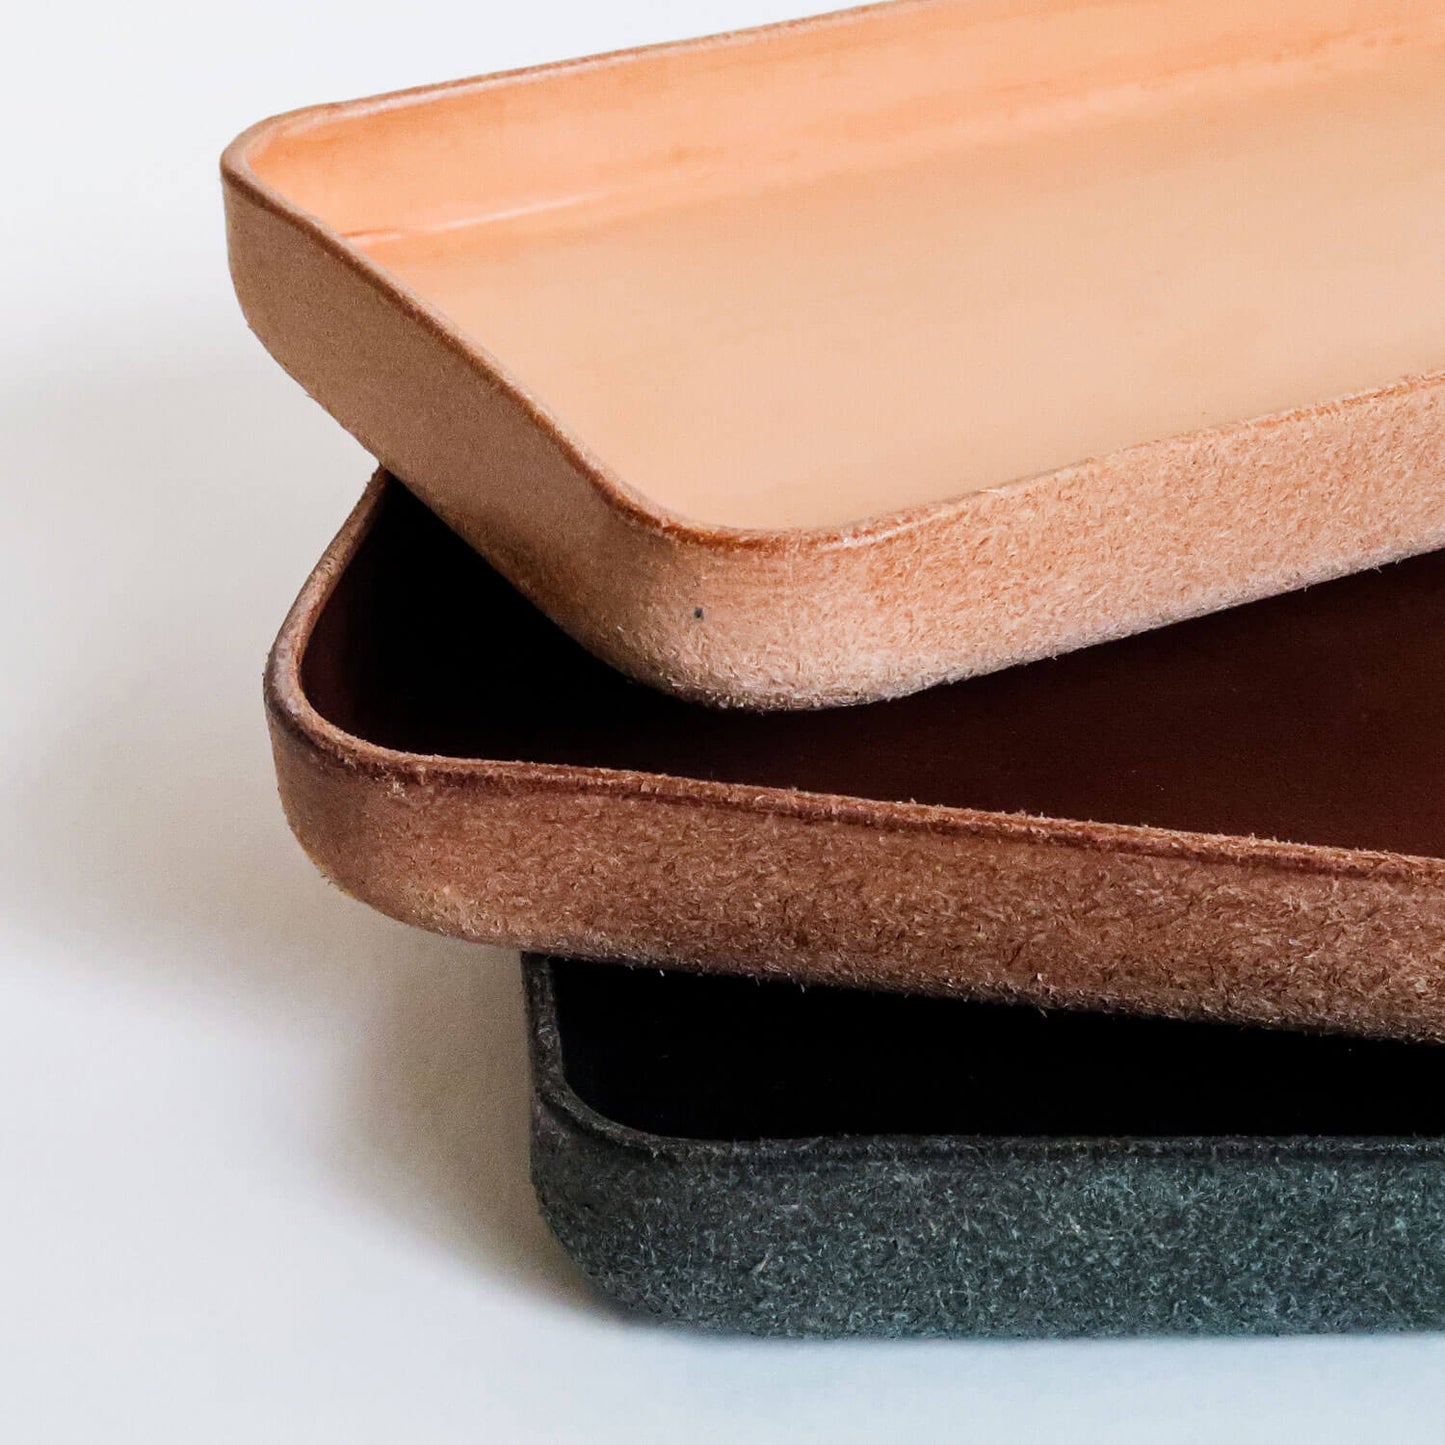 Leather Tray/ Medium Rectangle